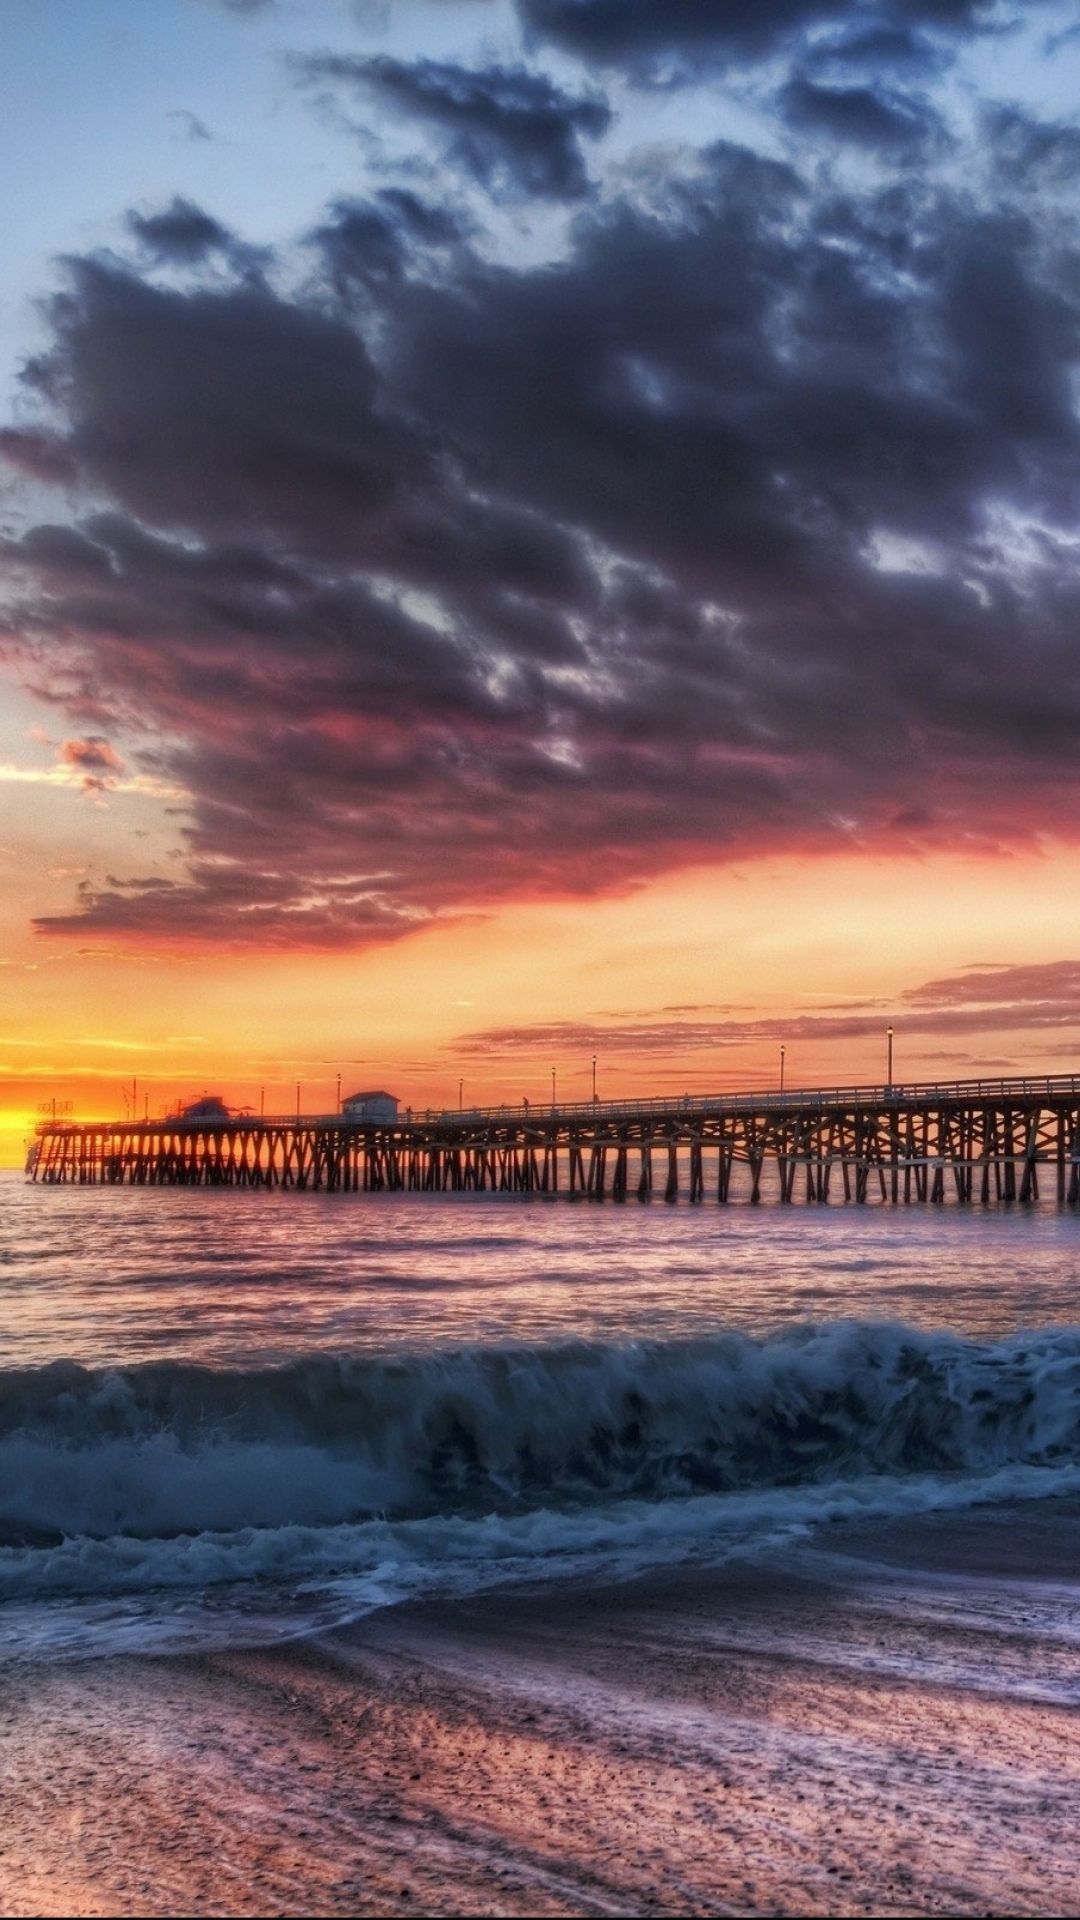 California Beach Dock Sunset iPhone Wallpaper Download iPhone